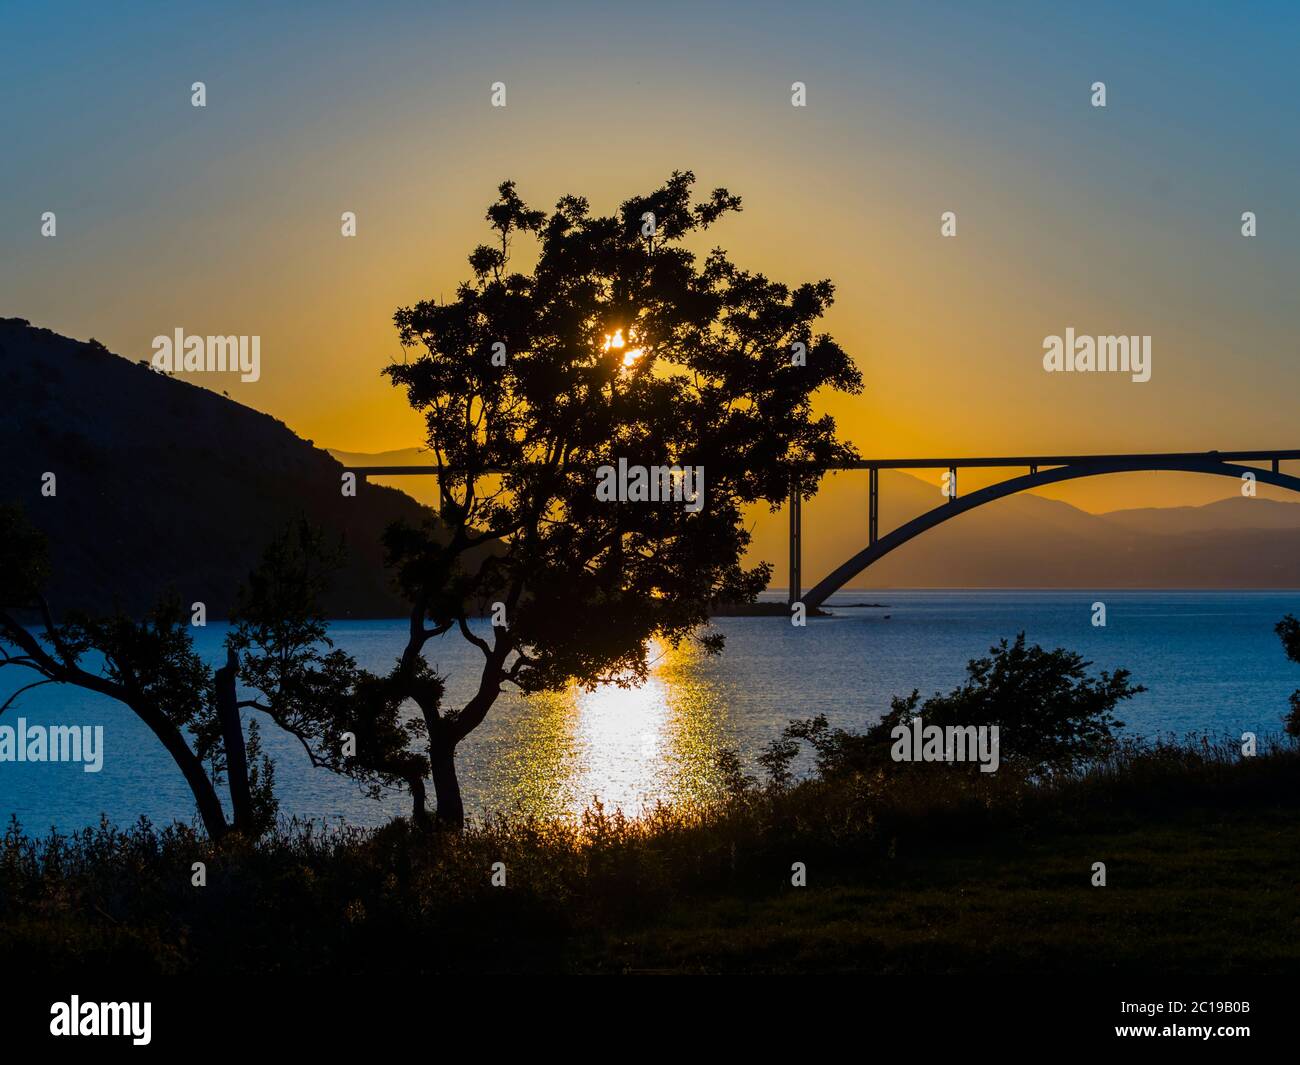 Sunset landscape bridge mainland to island Krk Croatia see view through dominant tree Stock Photo